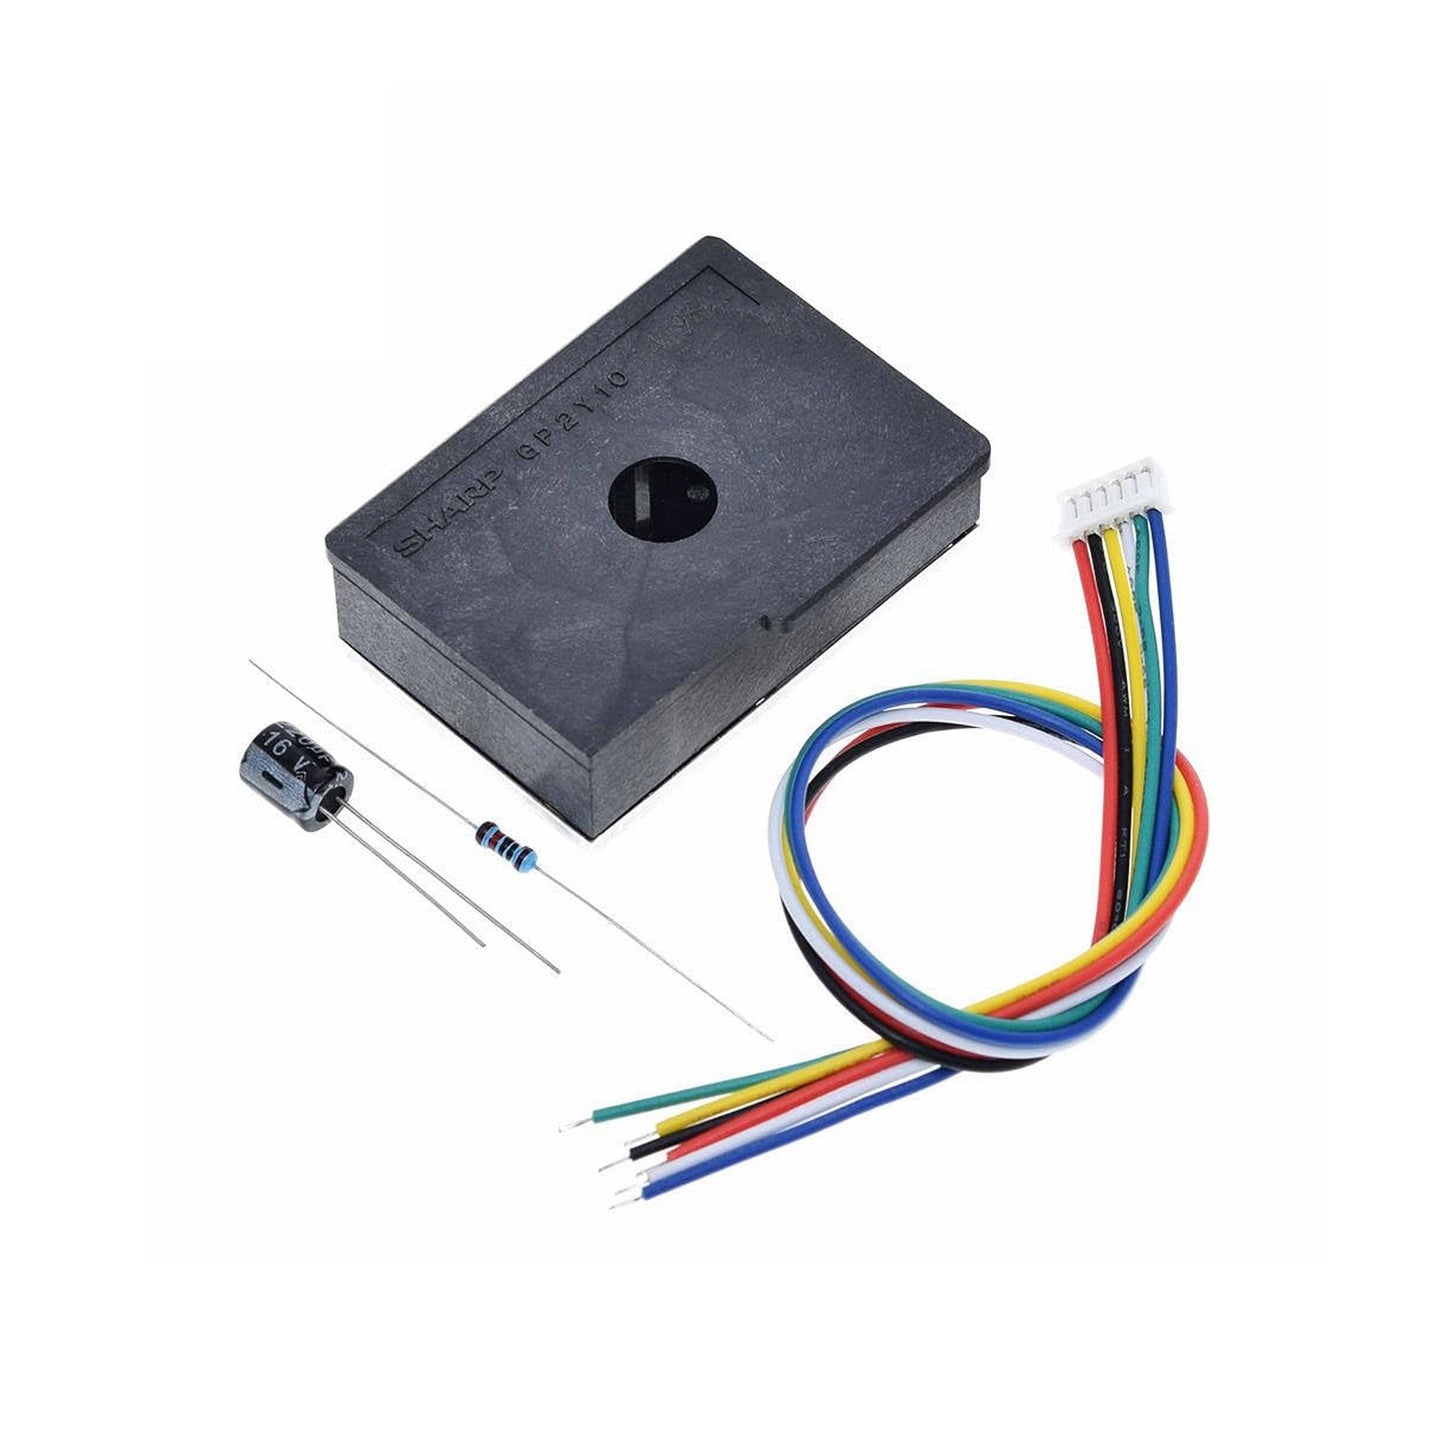 Optical Dust Sensor Module PM2.5 GP2Y1010AU0F Dust Smoke Particle Sensor /w Cable Capacitor Resistor - AB068 - REES52